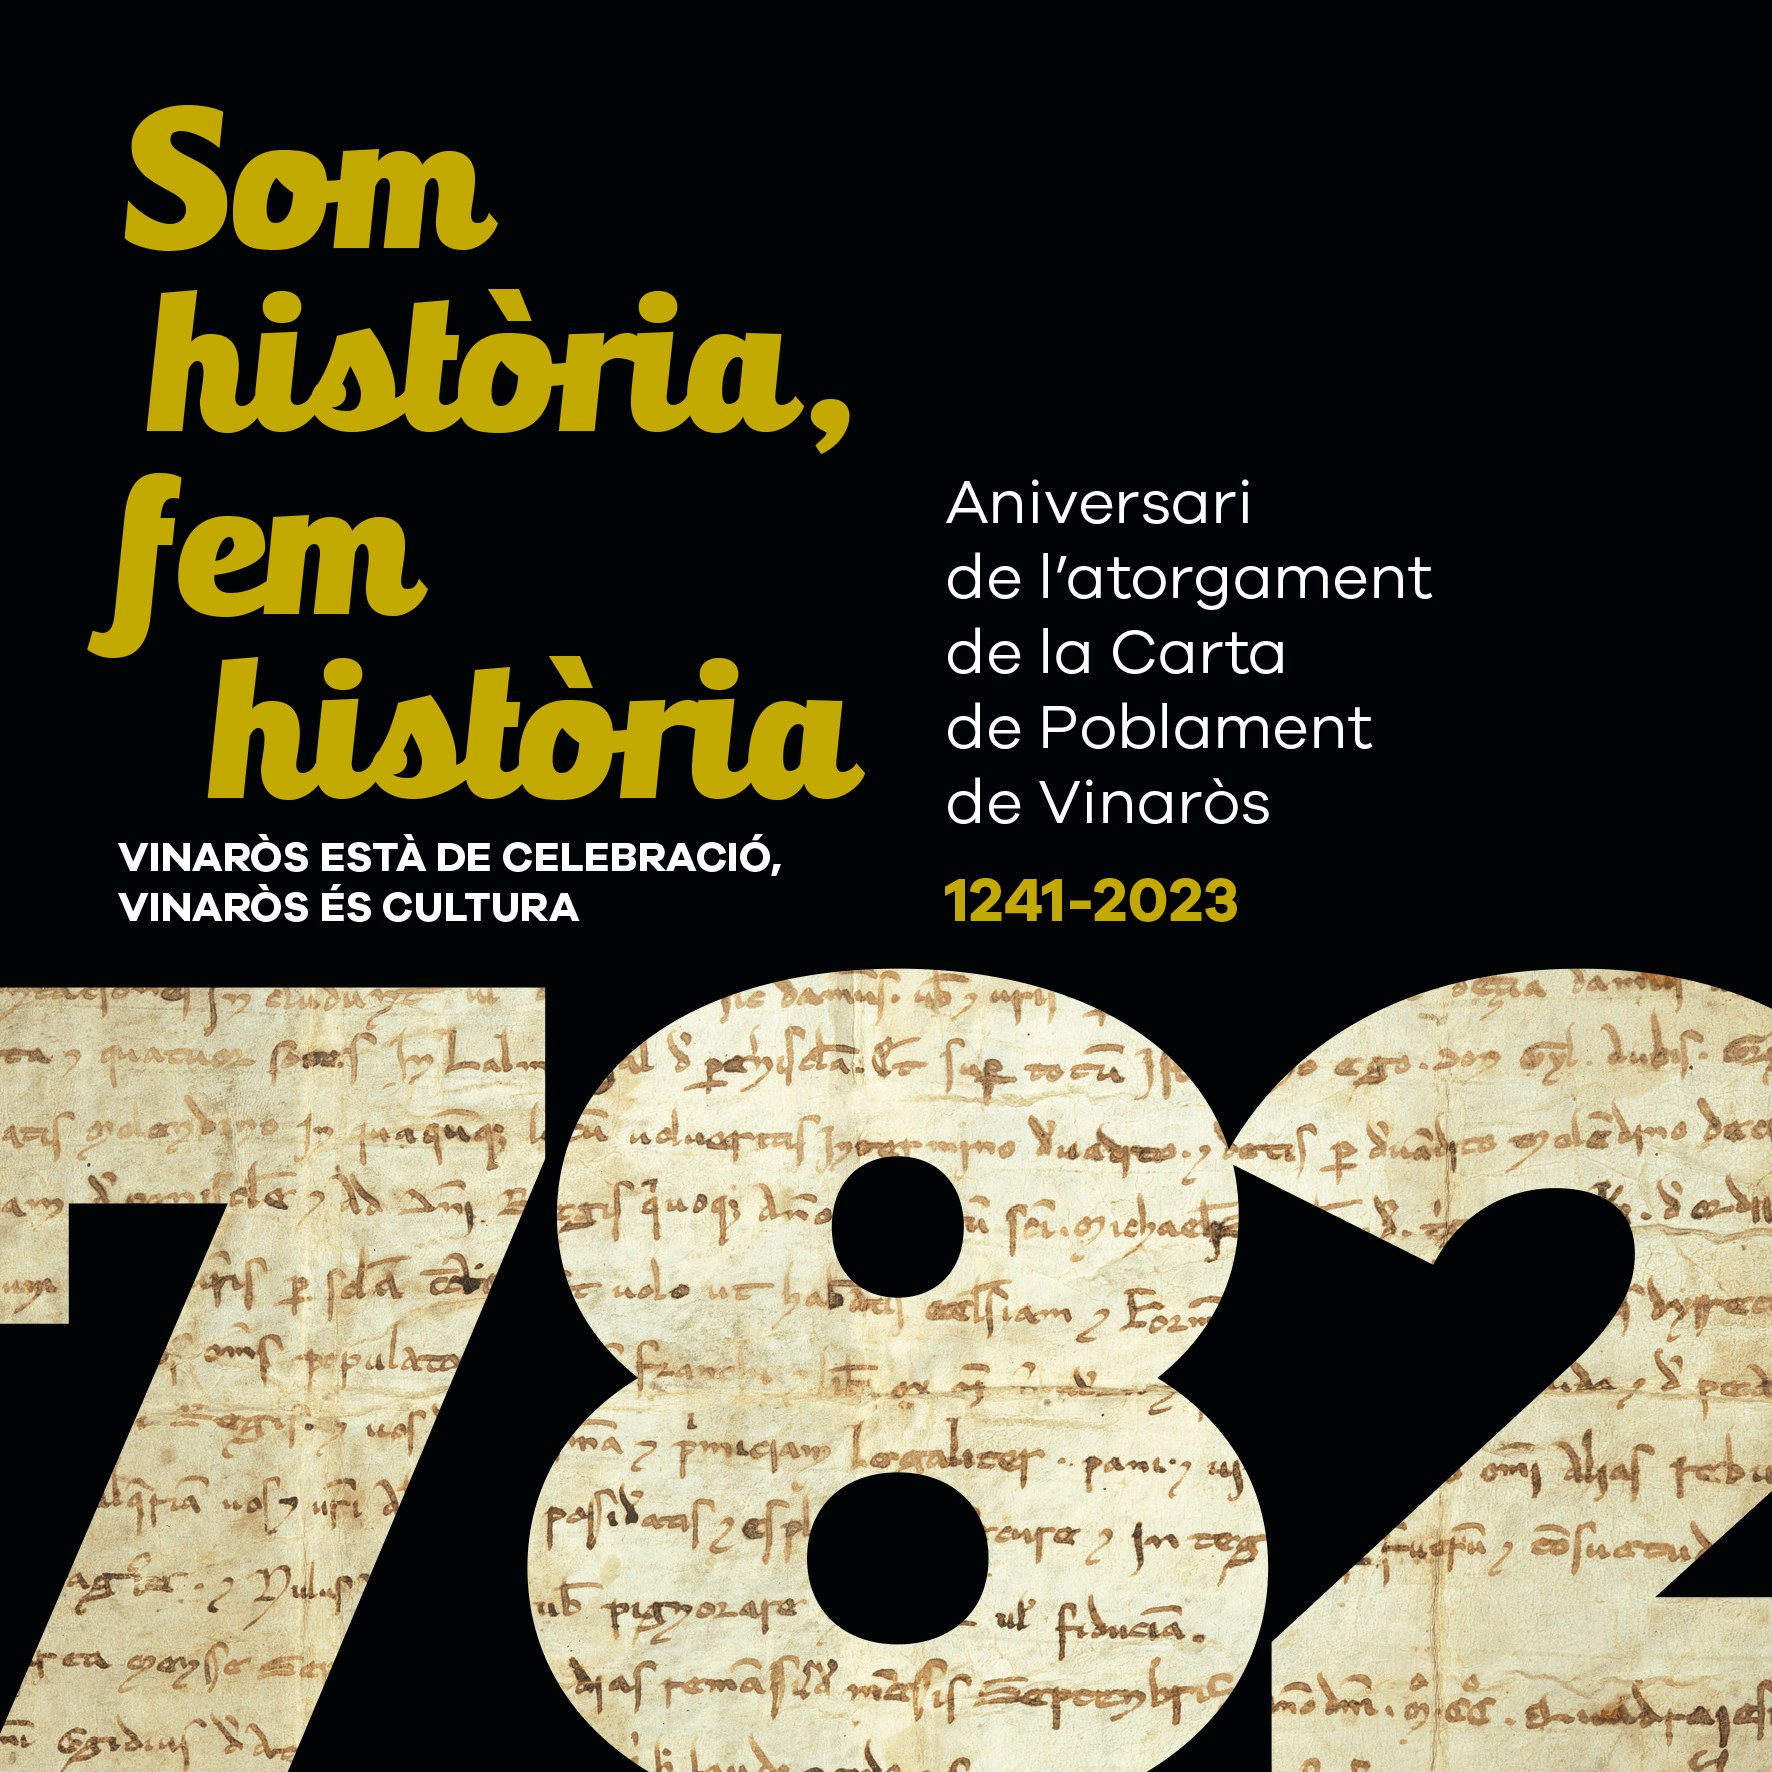 782 aniversario de la Carta de Poblamiento Vinaròs 2023